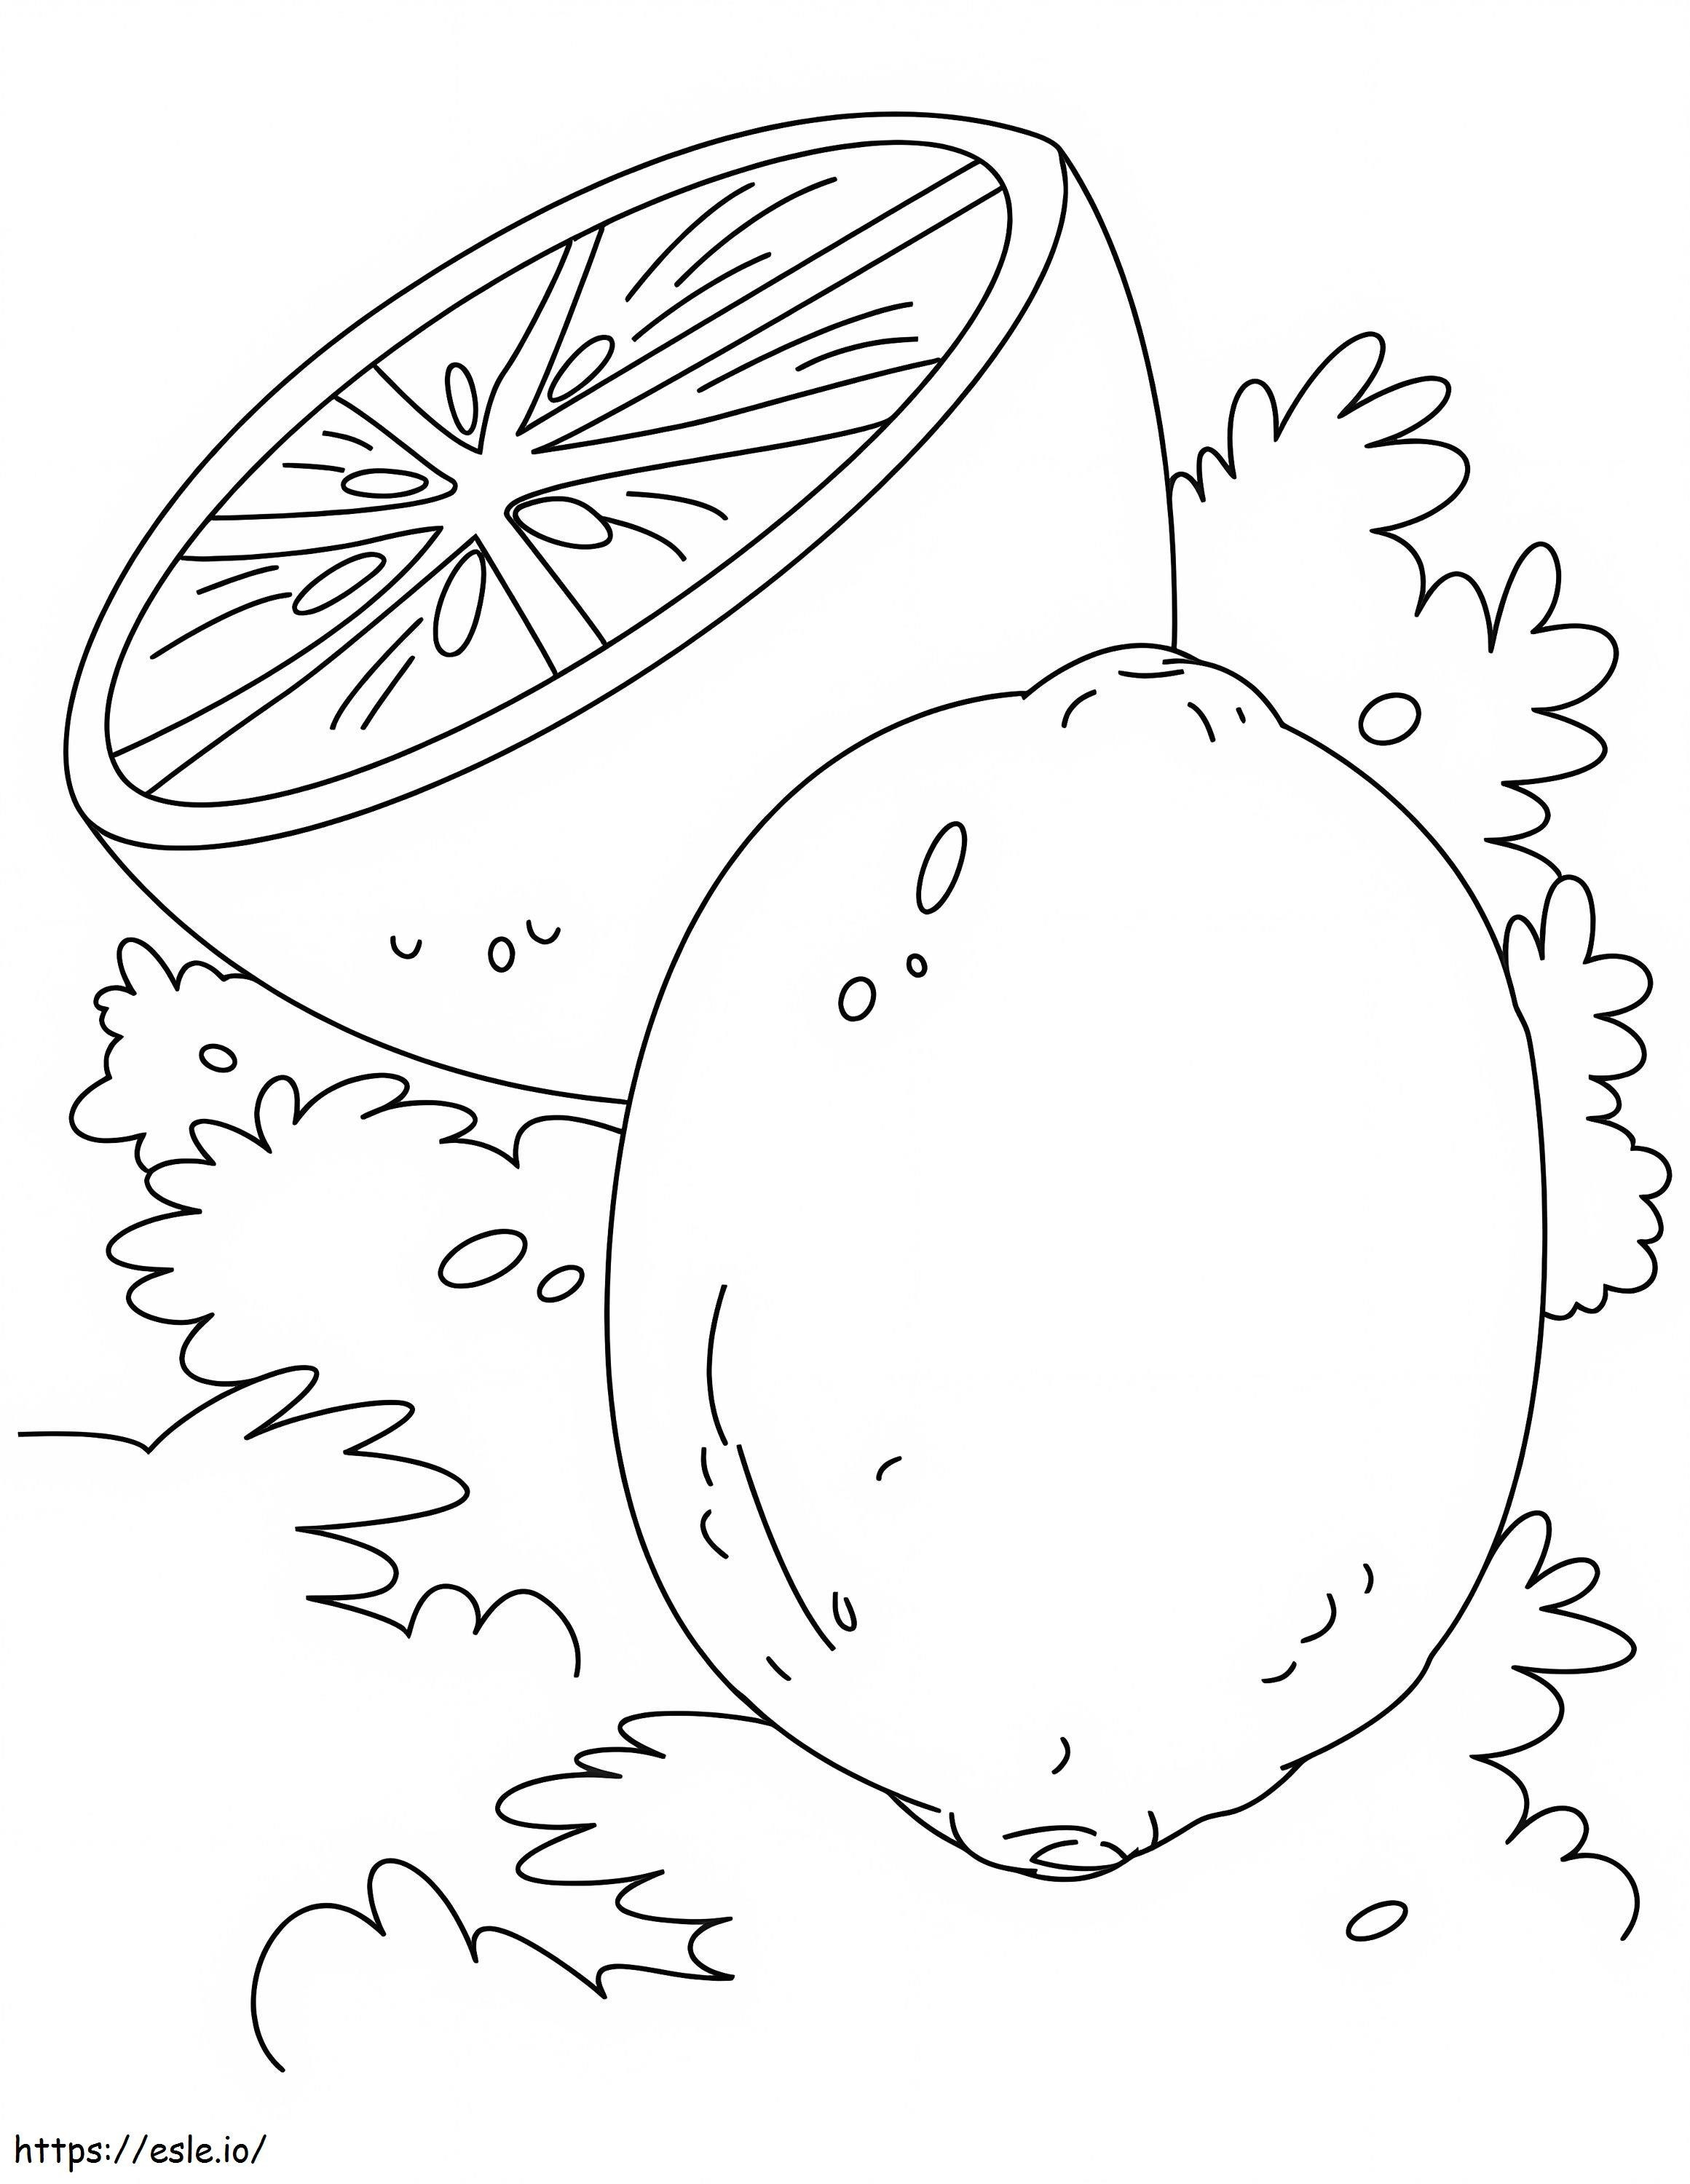 Simple One Lemon And Half Lemon coloring page